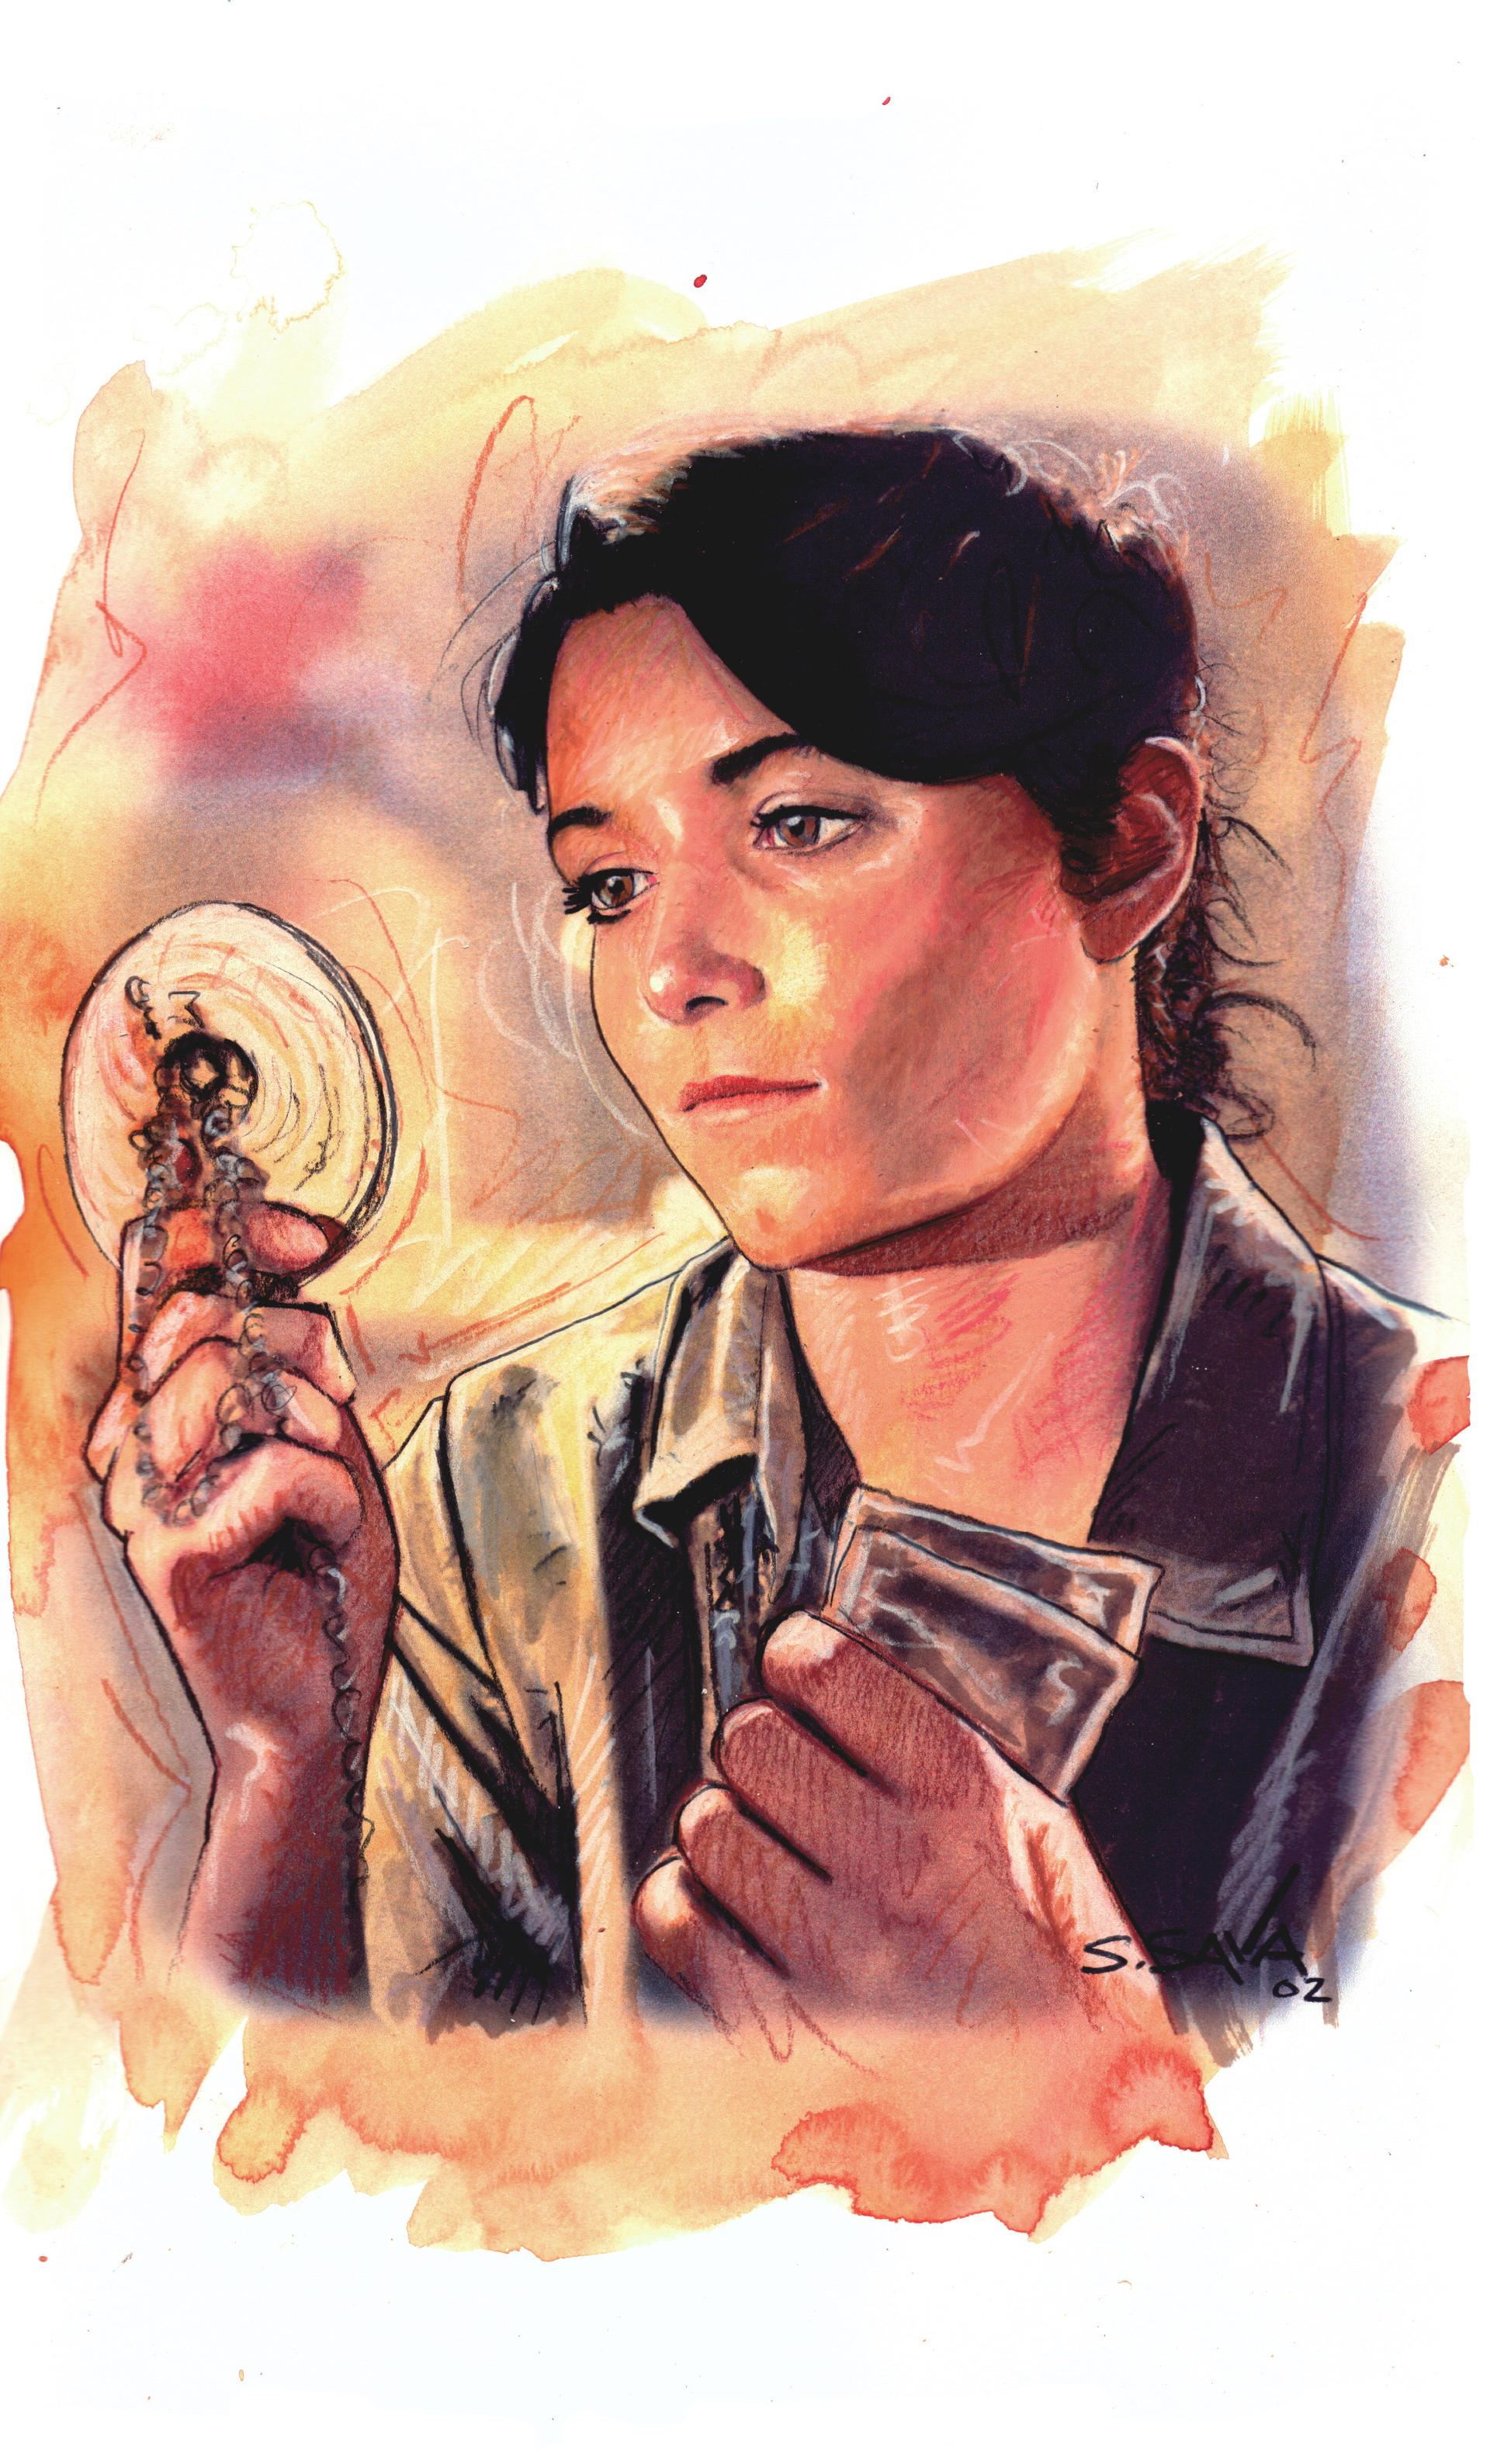 Marion from Indiana Jones